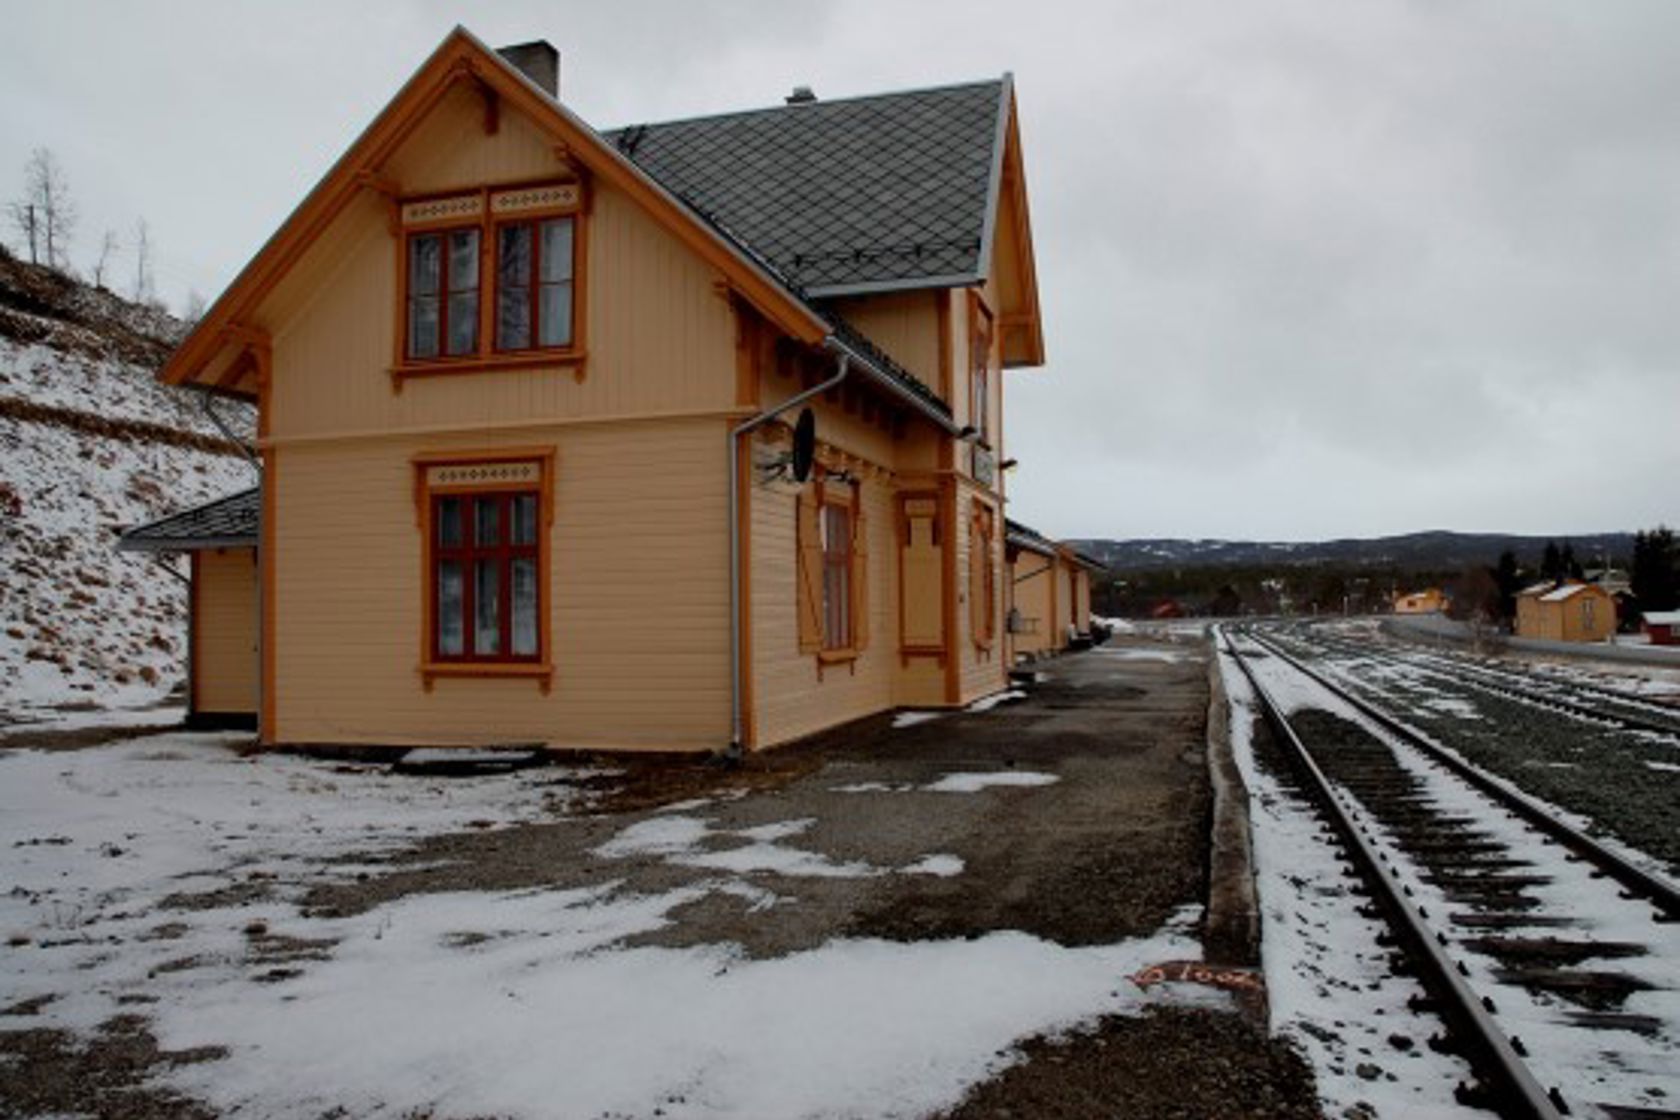 Exterior view of Glåmos station